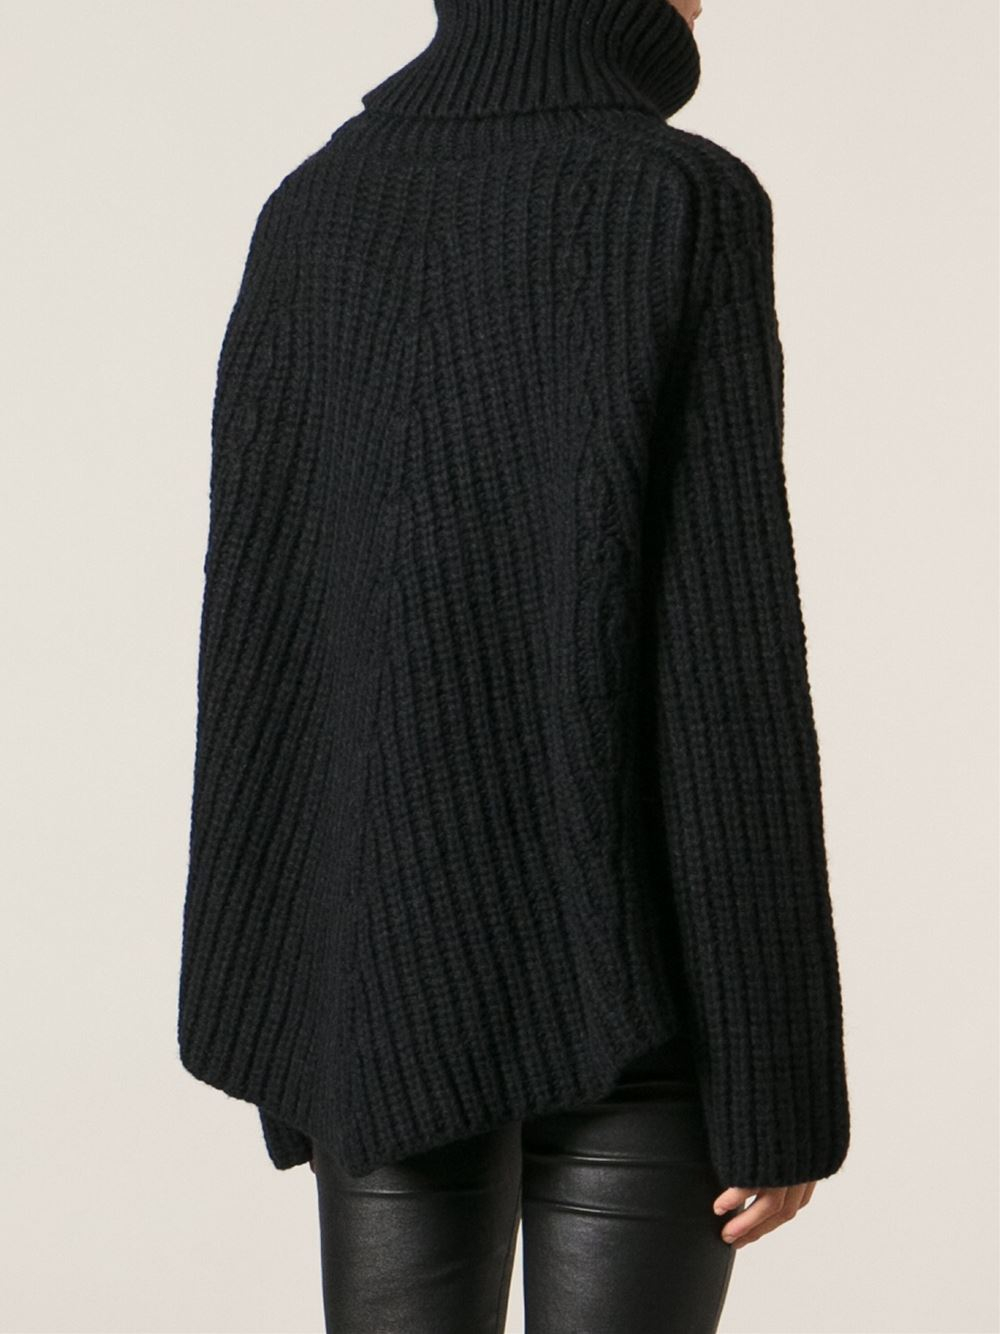 Lyst - Ann Demeulemeester Chunky Knit Turtleneck Sweater in Black